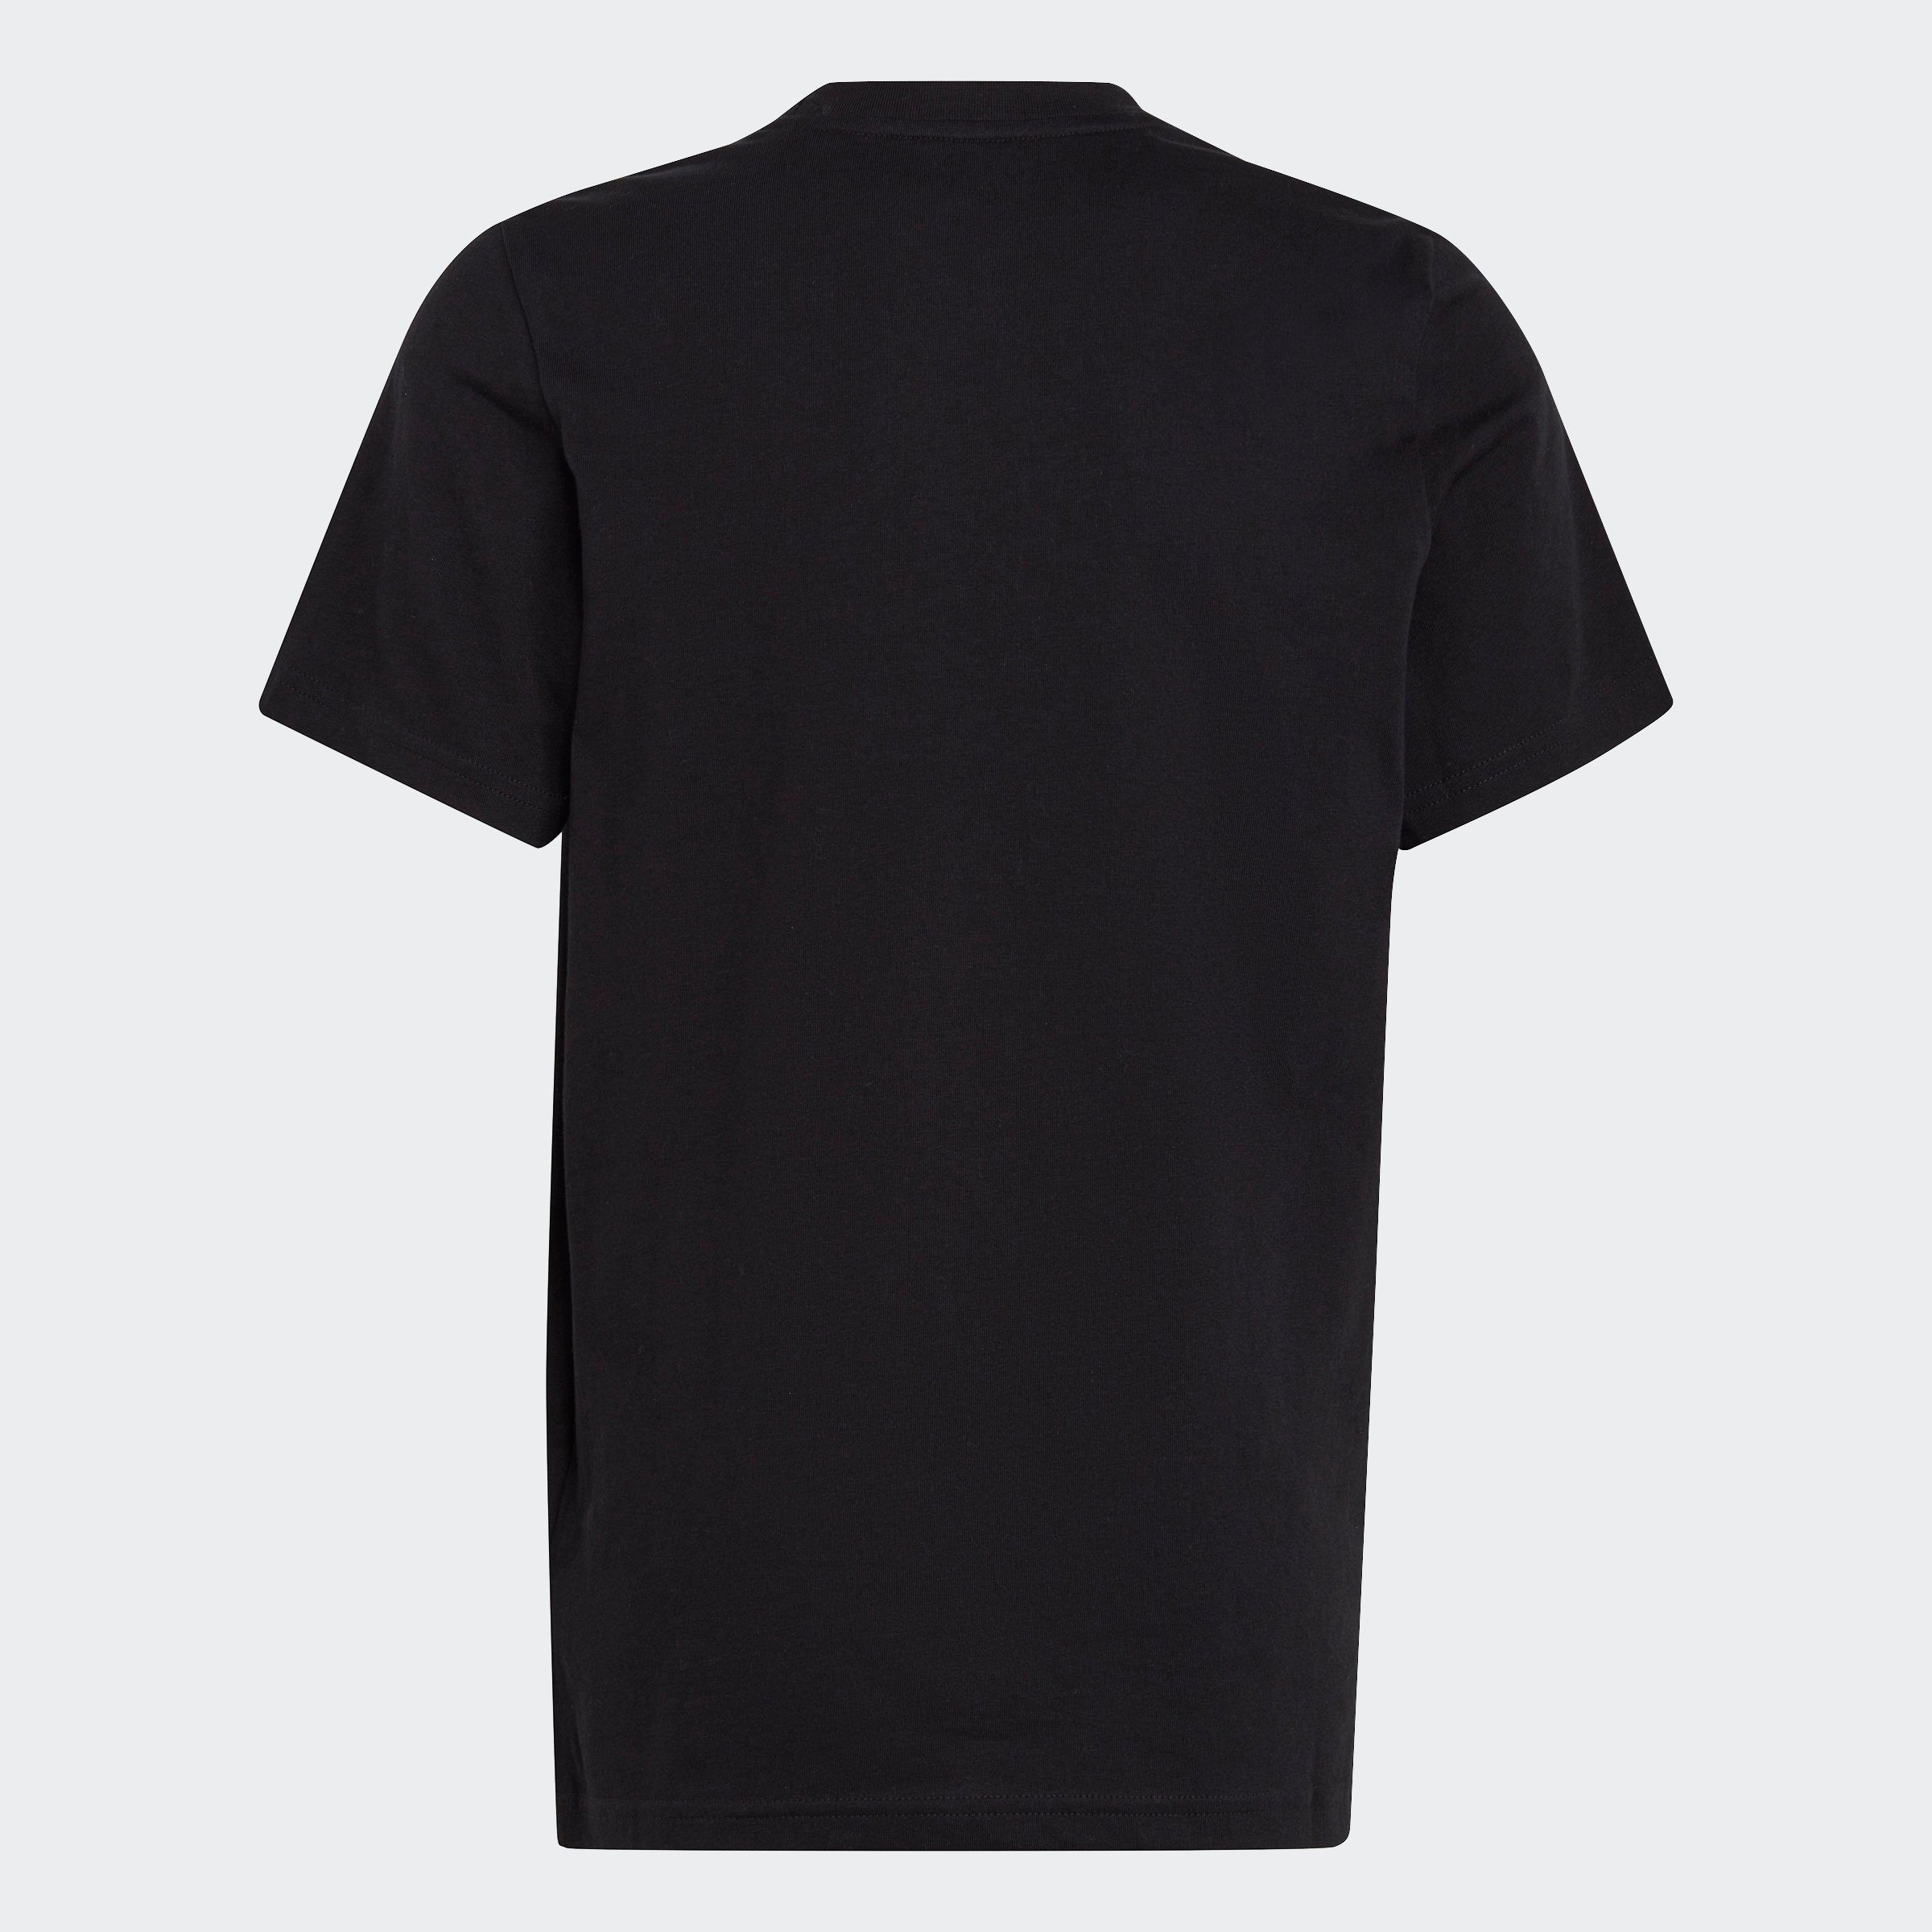 LOGO Sportswear / Black T-Shirt White COTTON SMALL adidas ESSENTIALS